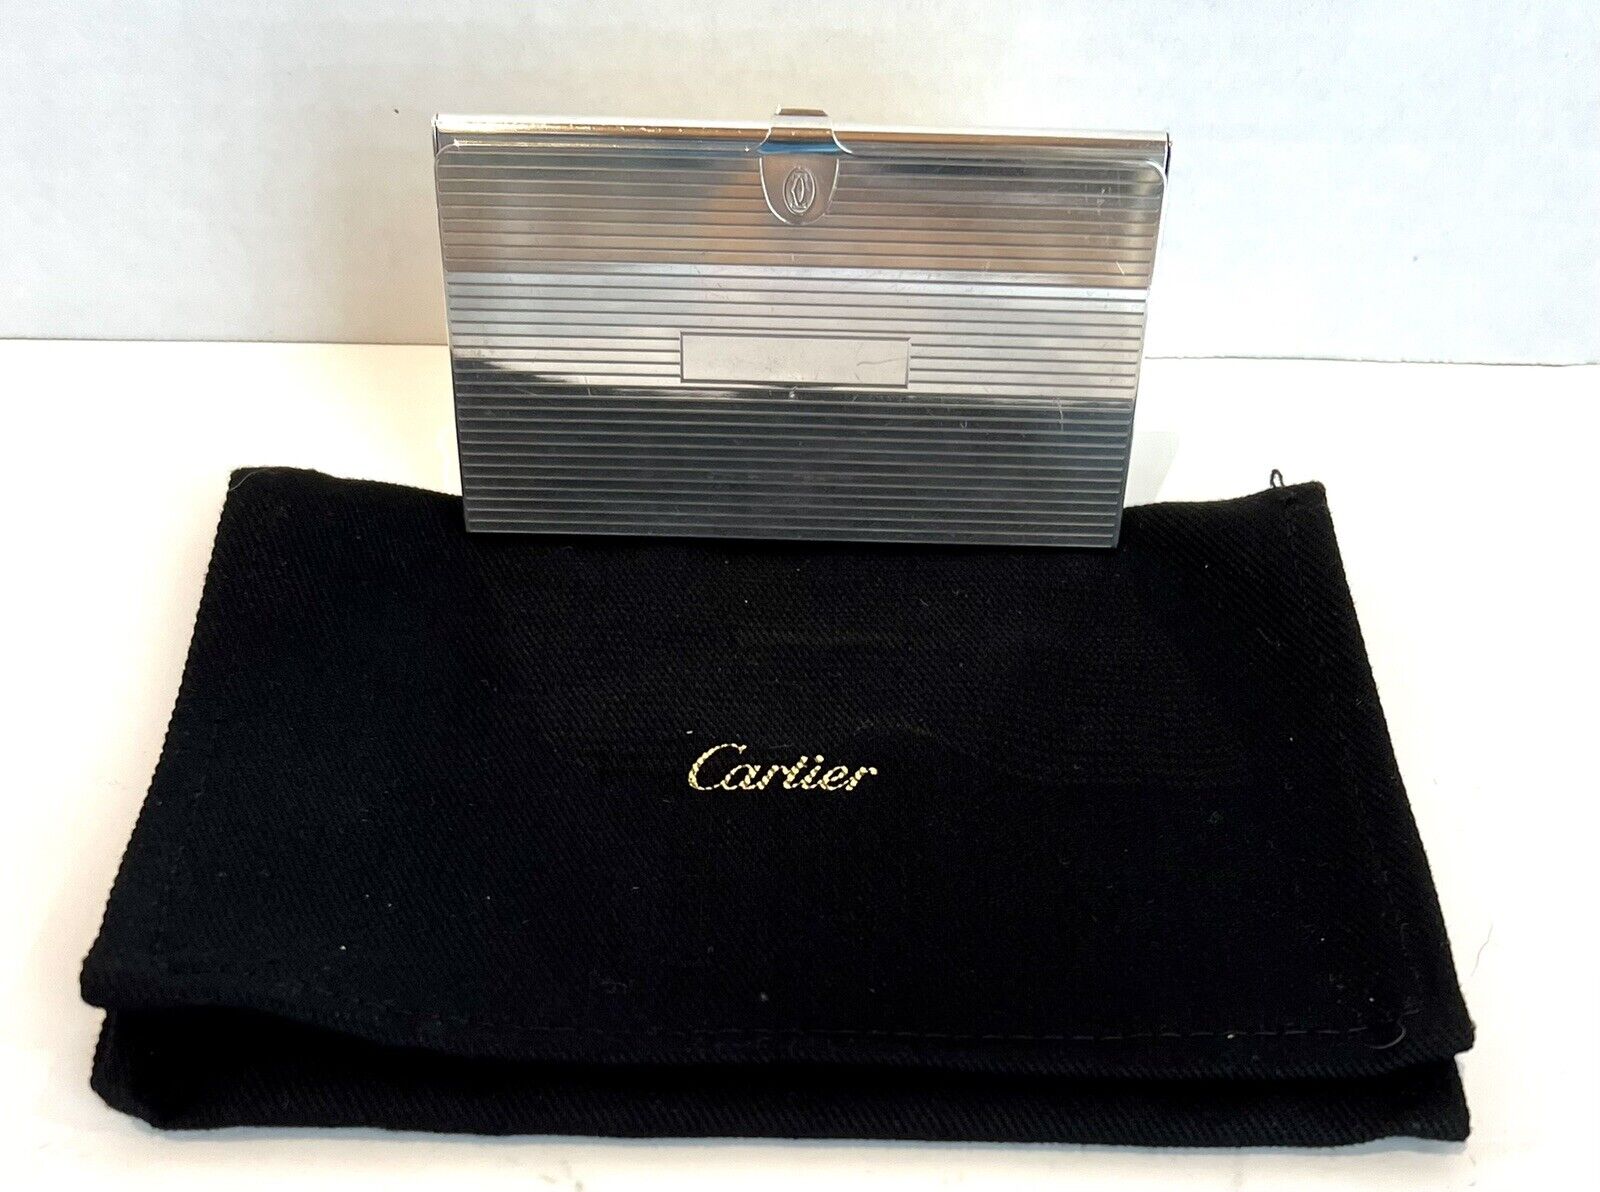 Vintage Cartier Sterling Silver Card Case Holder No Monogram With Dust Bag